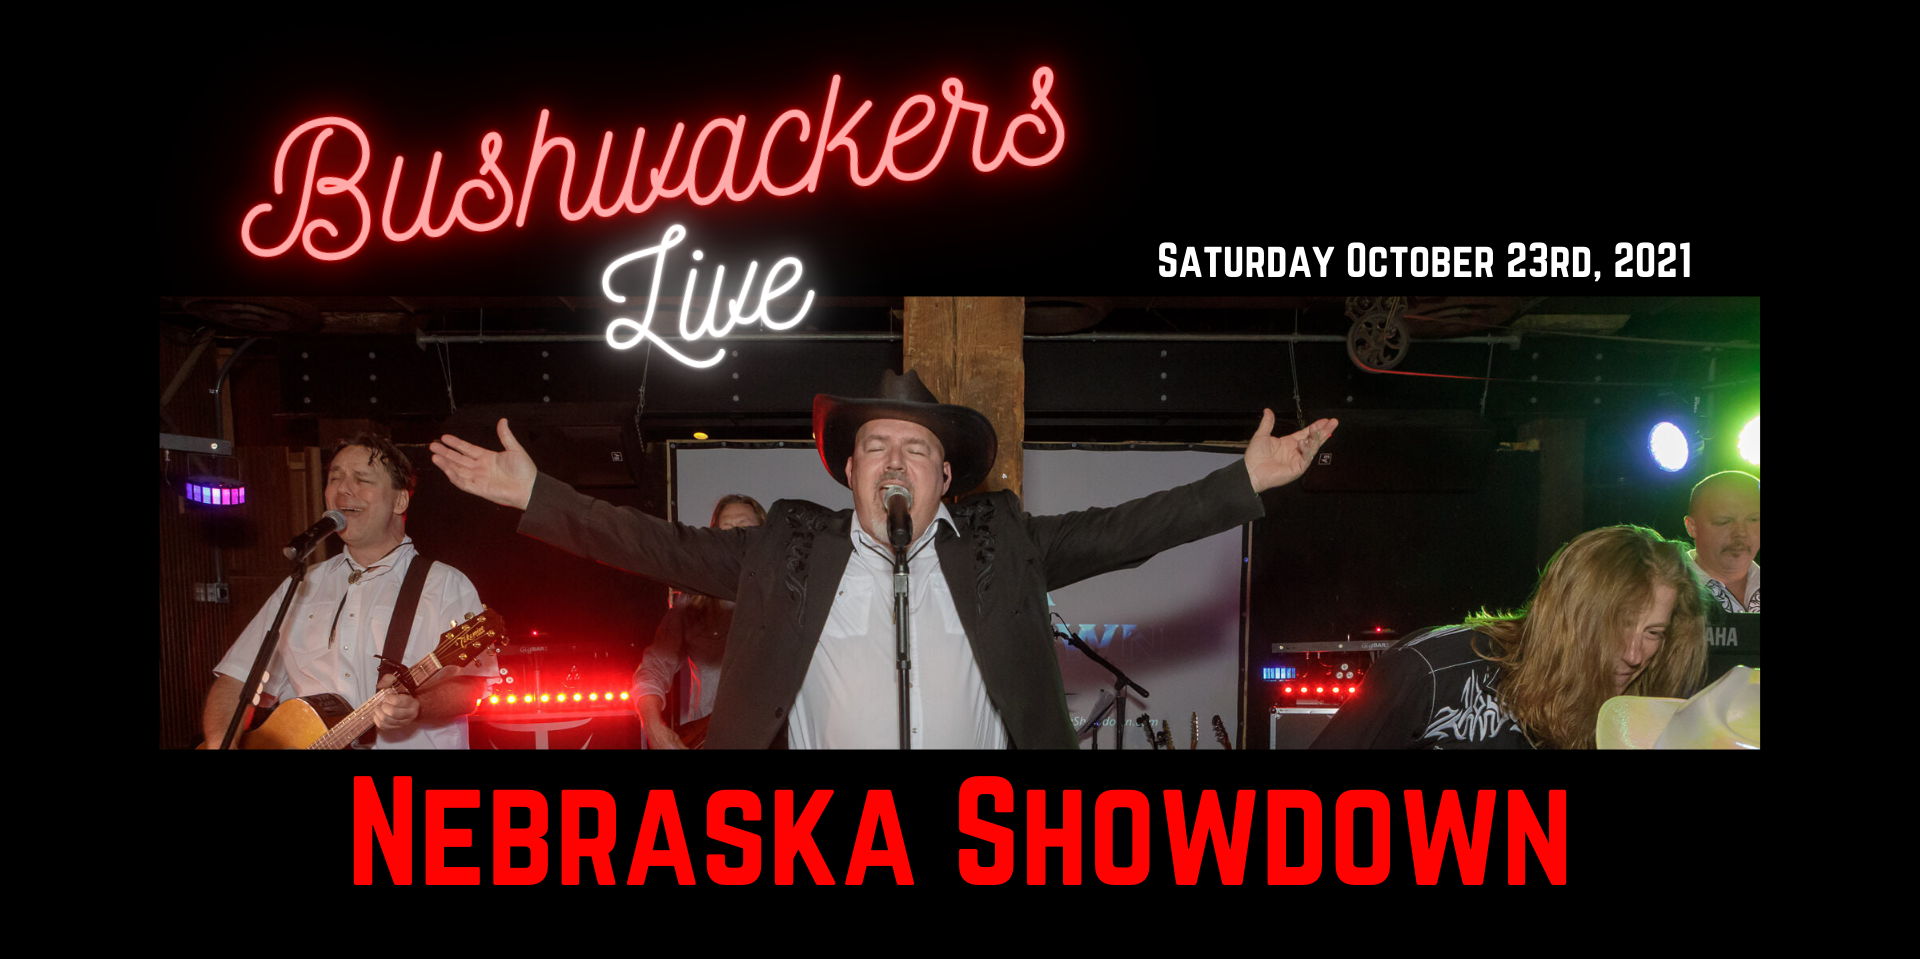 Bushwackers Live: Nebraska Showdown promotional image